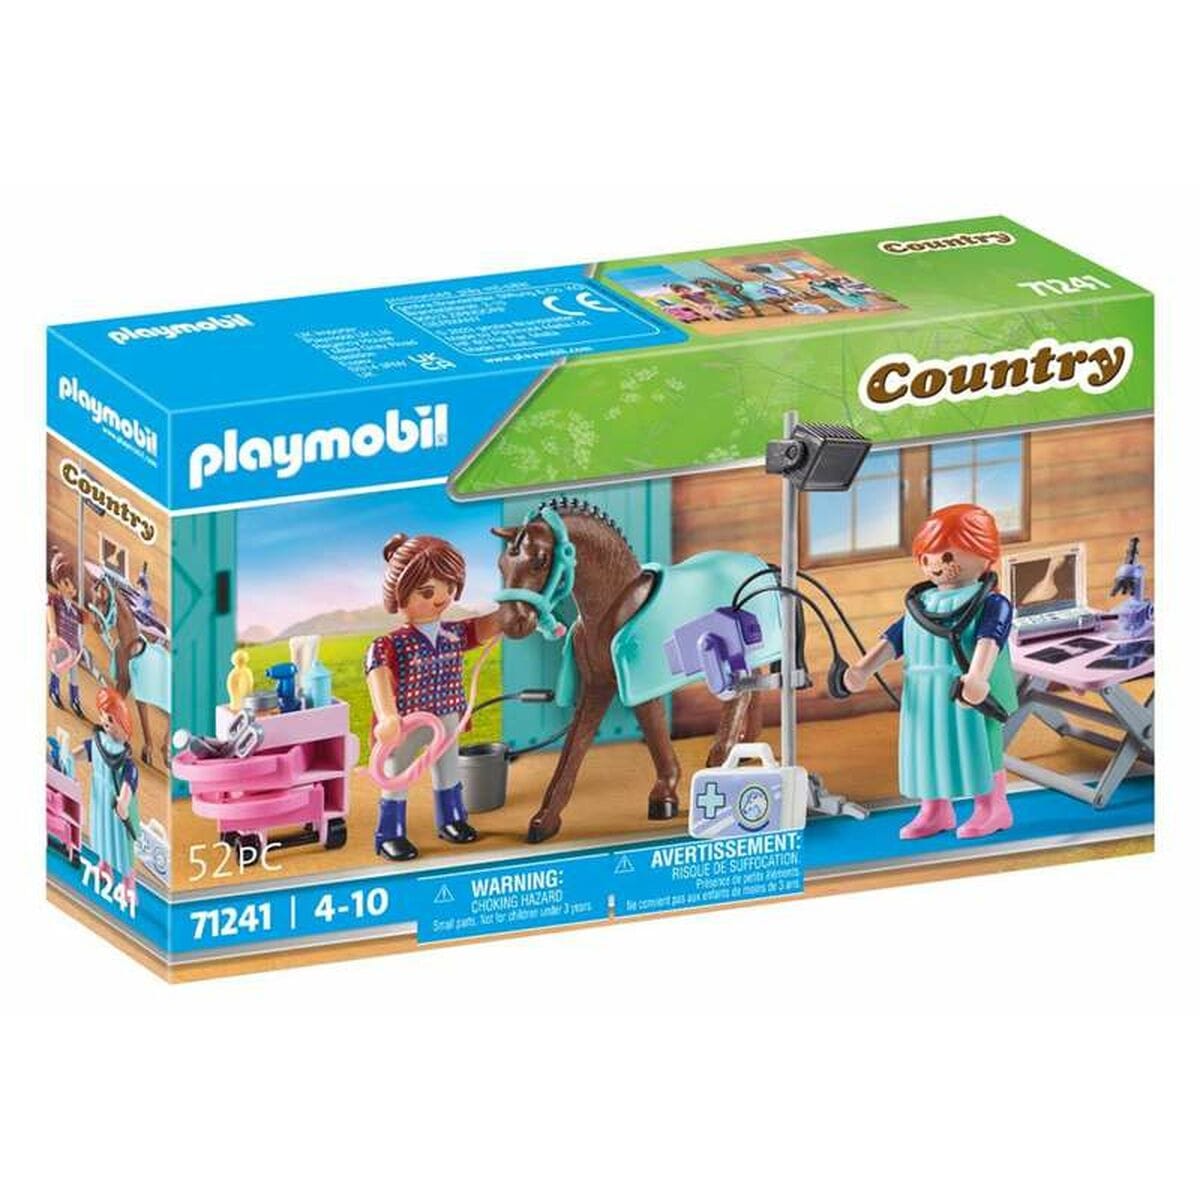 Playmobil Spielzeug | Kostüme > Spielzeug und Spiele > Weiteres spielzeug Playset Playmobil 71241 Pferd 52 Stücke